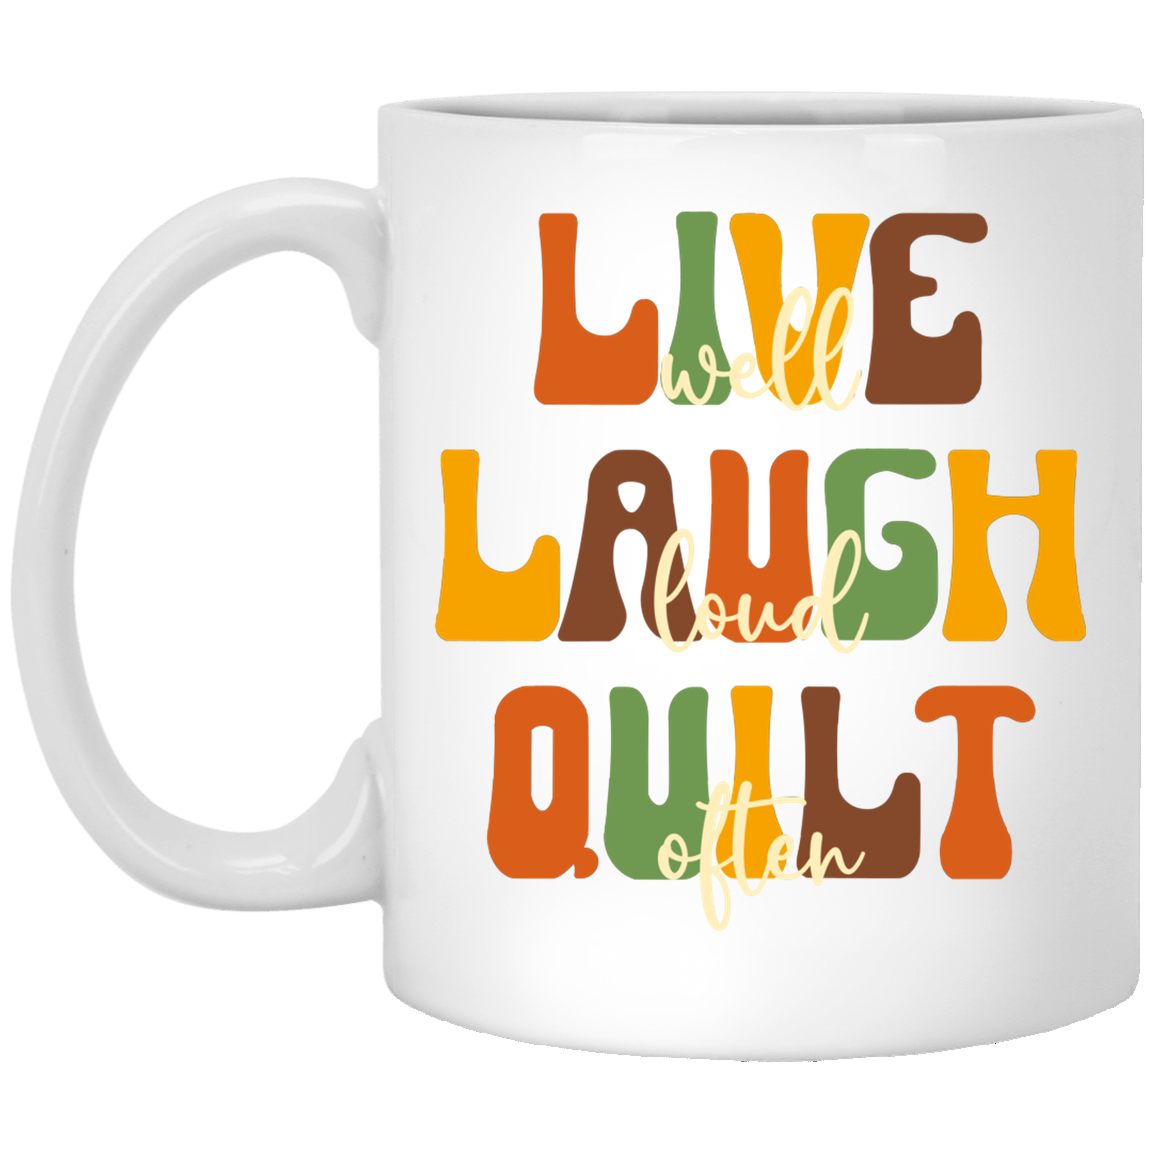 Live Well Quilt Often Mugs